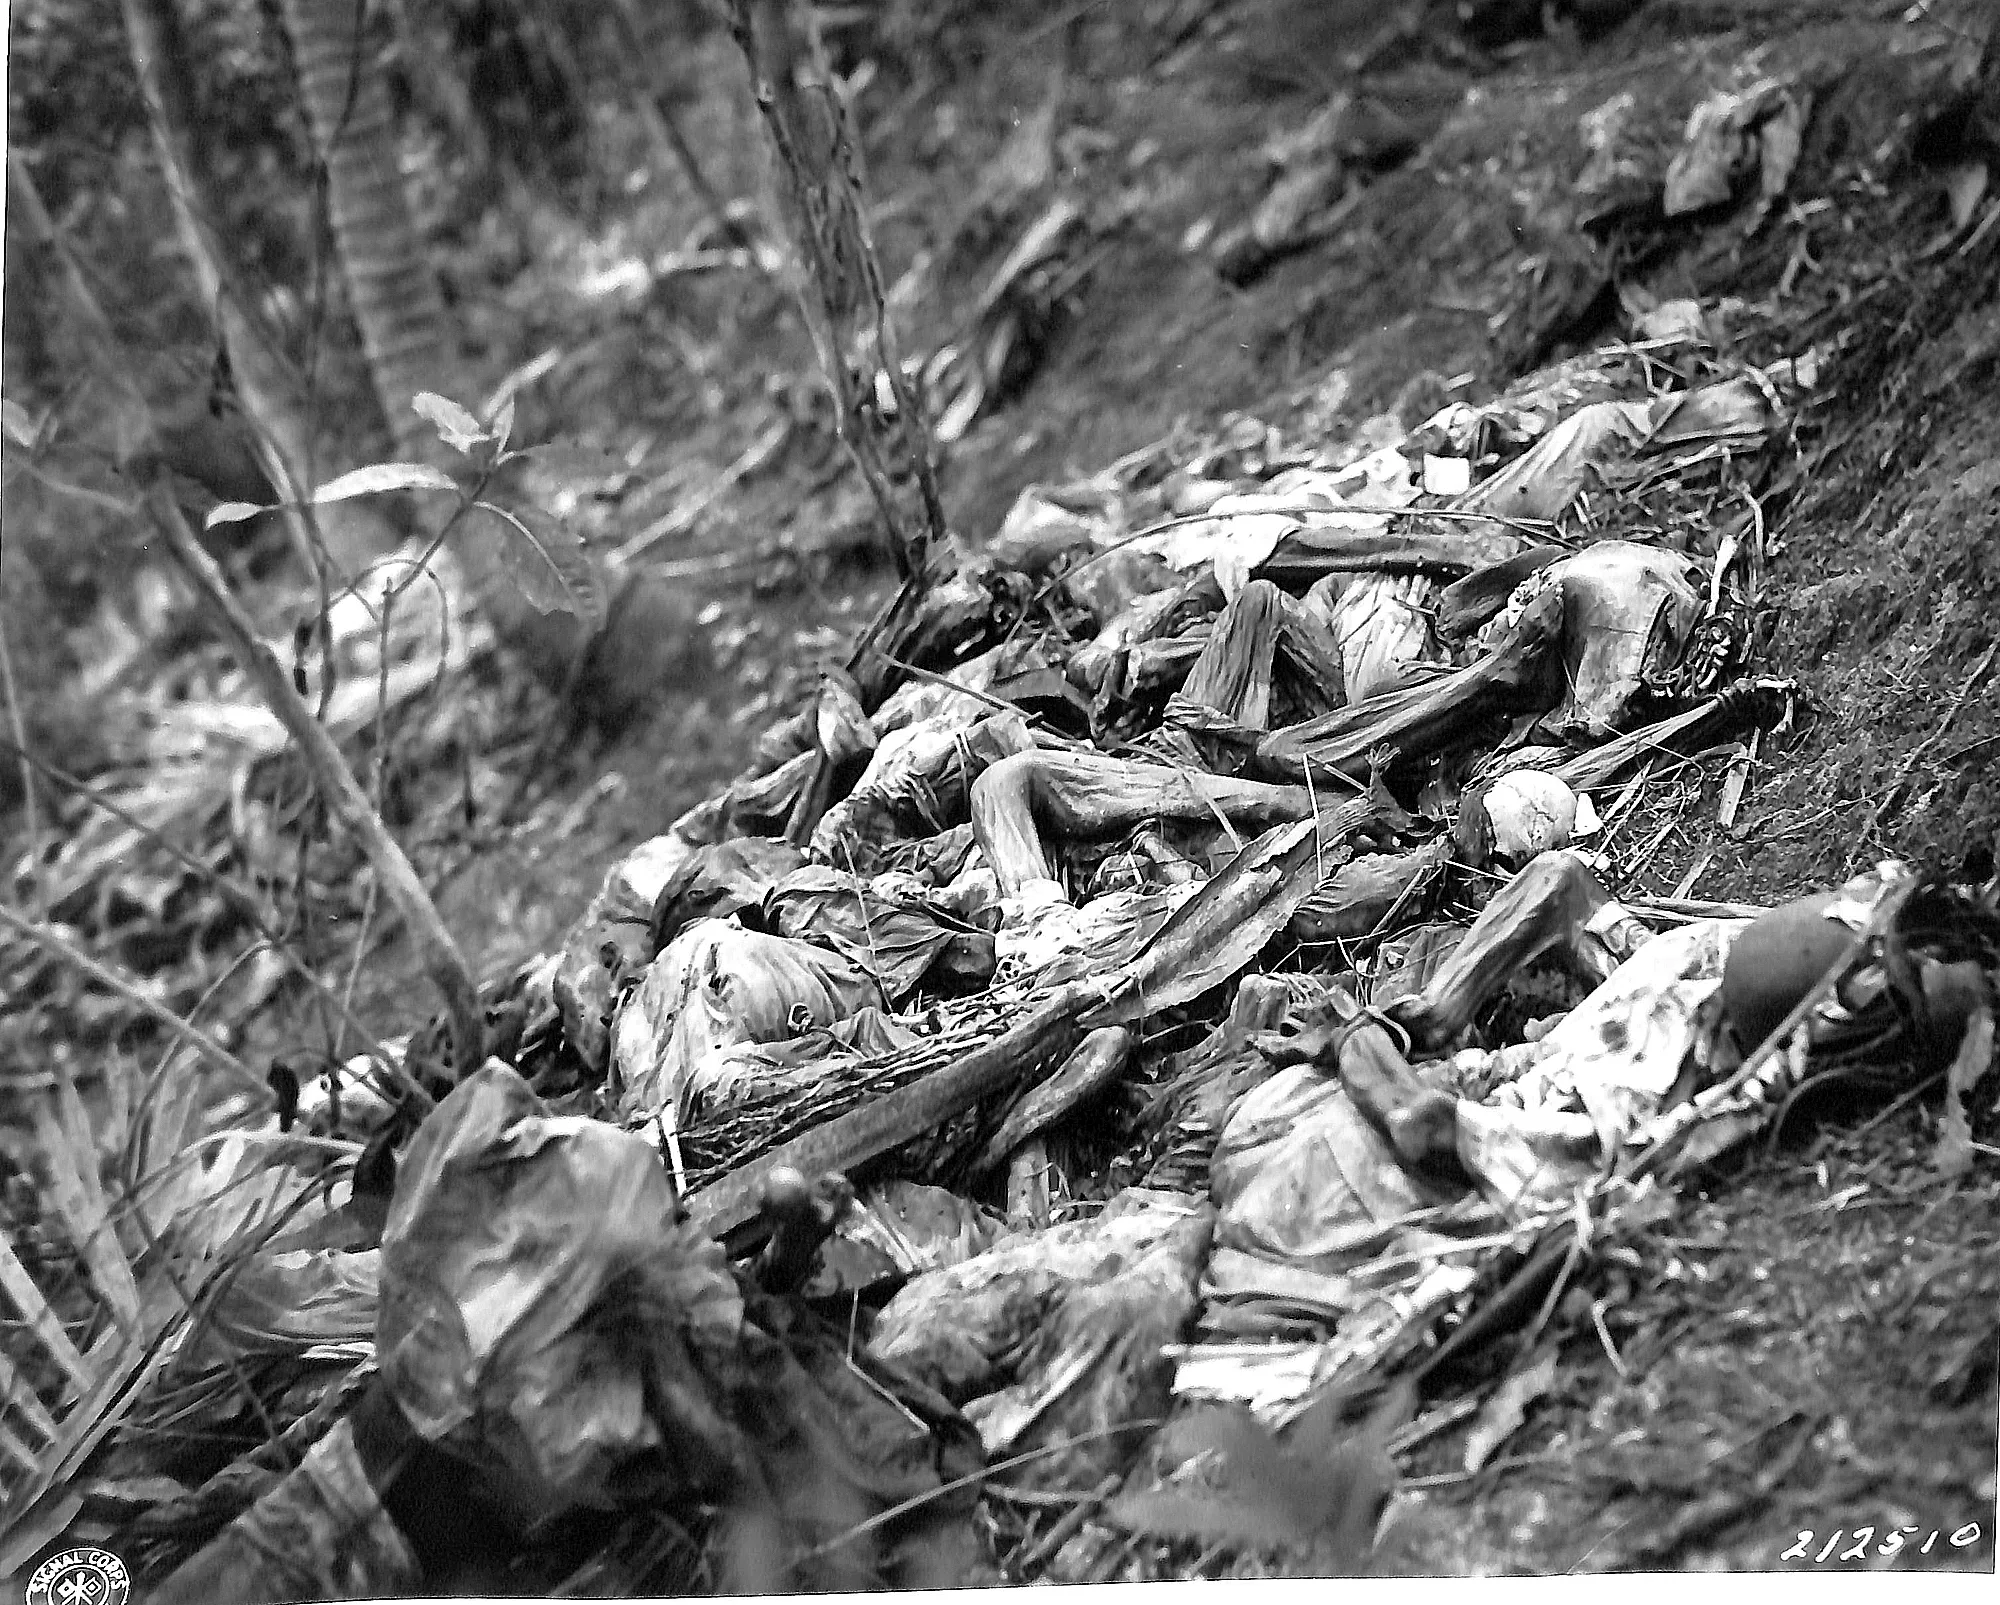 Massacred civilians in Lipa